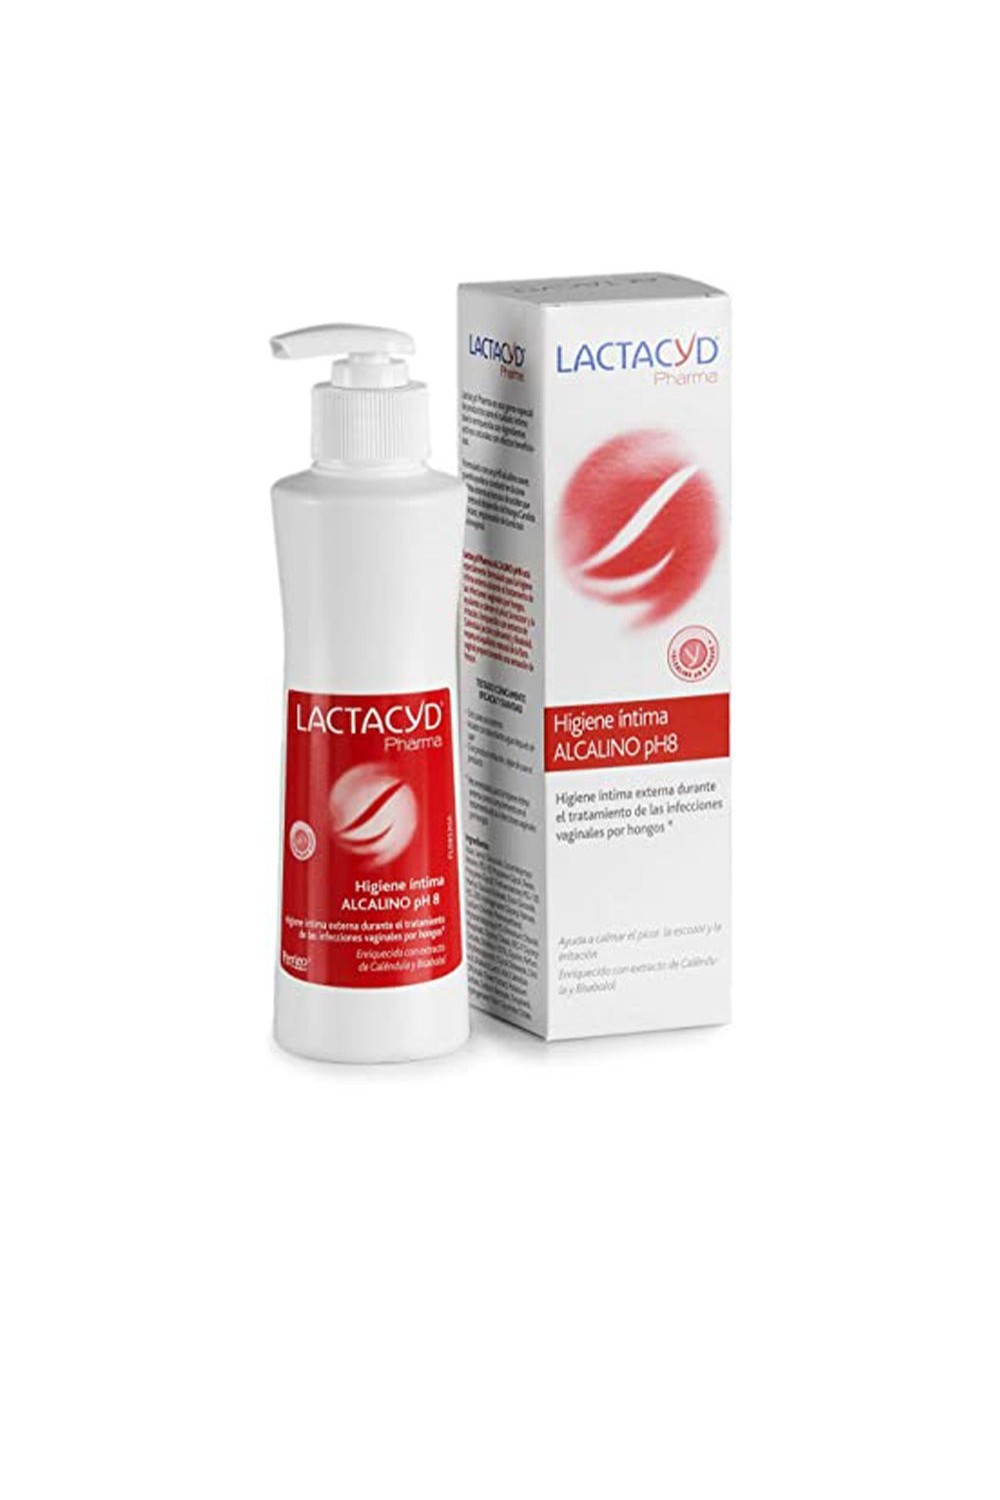 Lactacyd Intimate Hygiene Ph 8 External Use 250ml